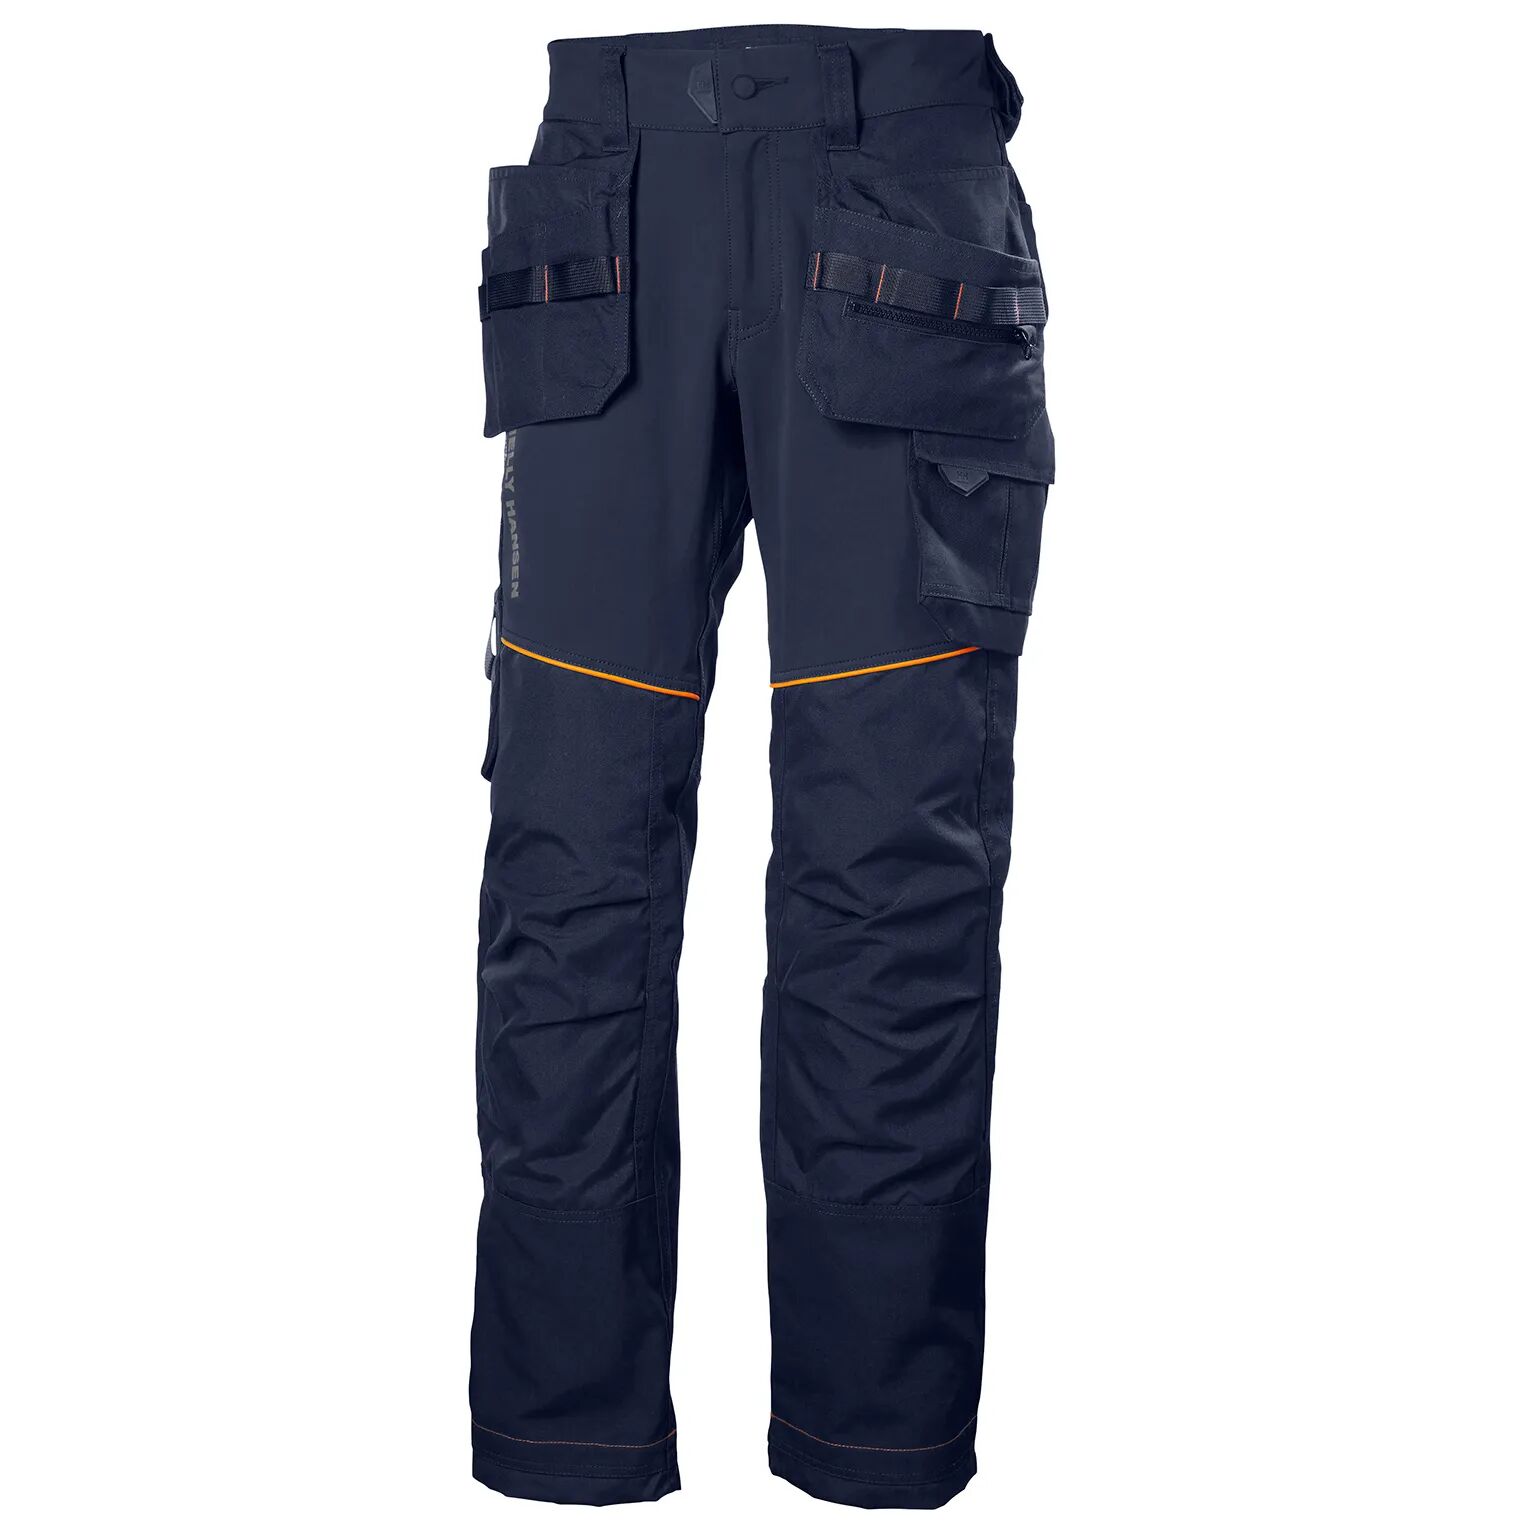 HH Workwear Helly Hansen WorkwearChelsea Evolution Construction Pants Navy 30/32